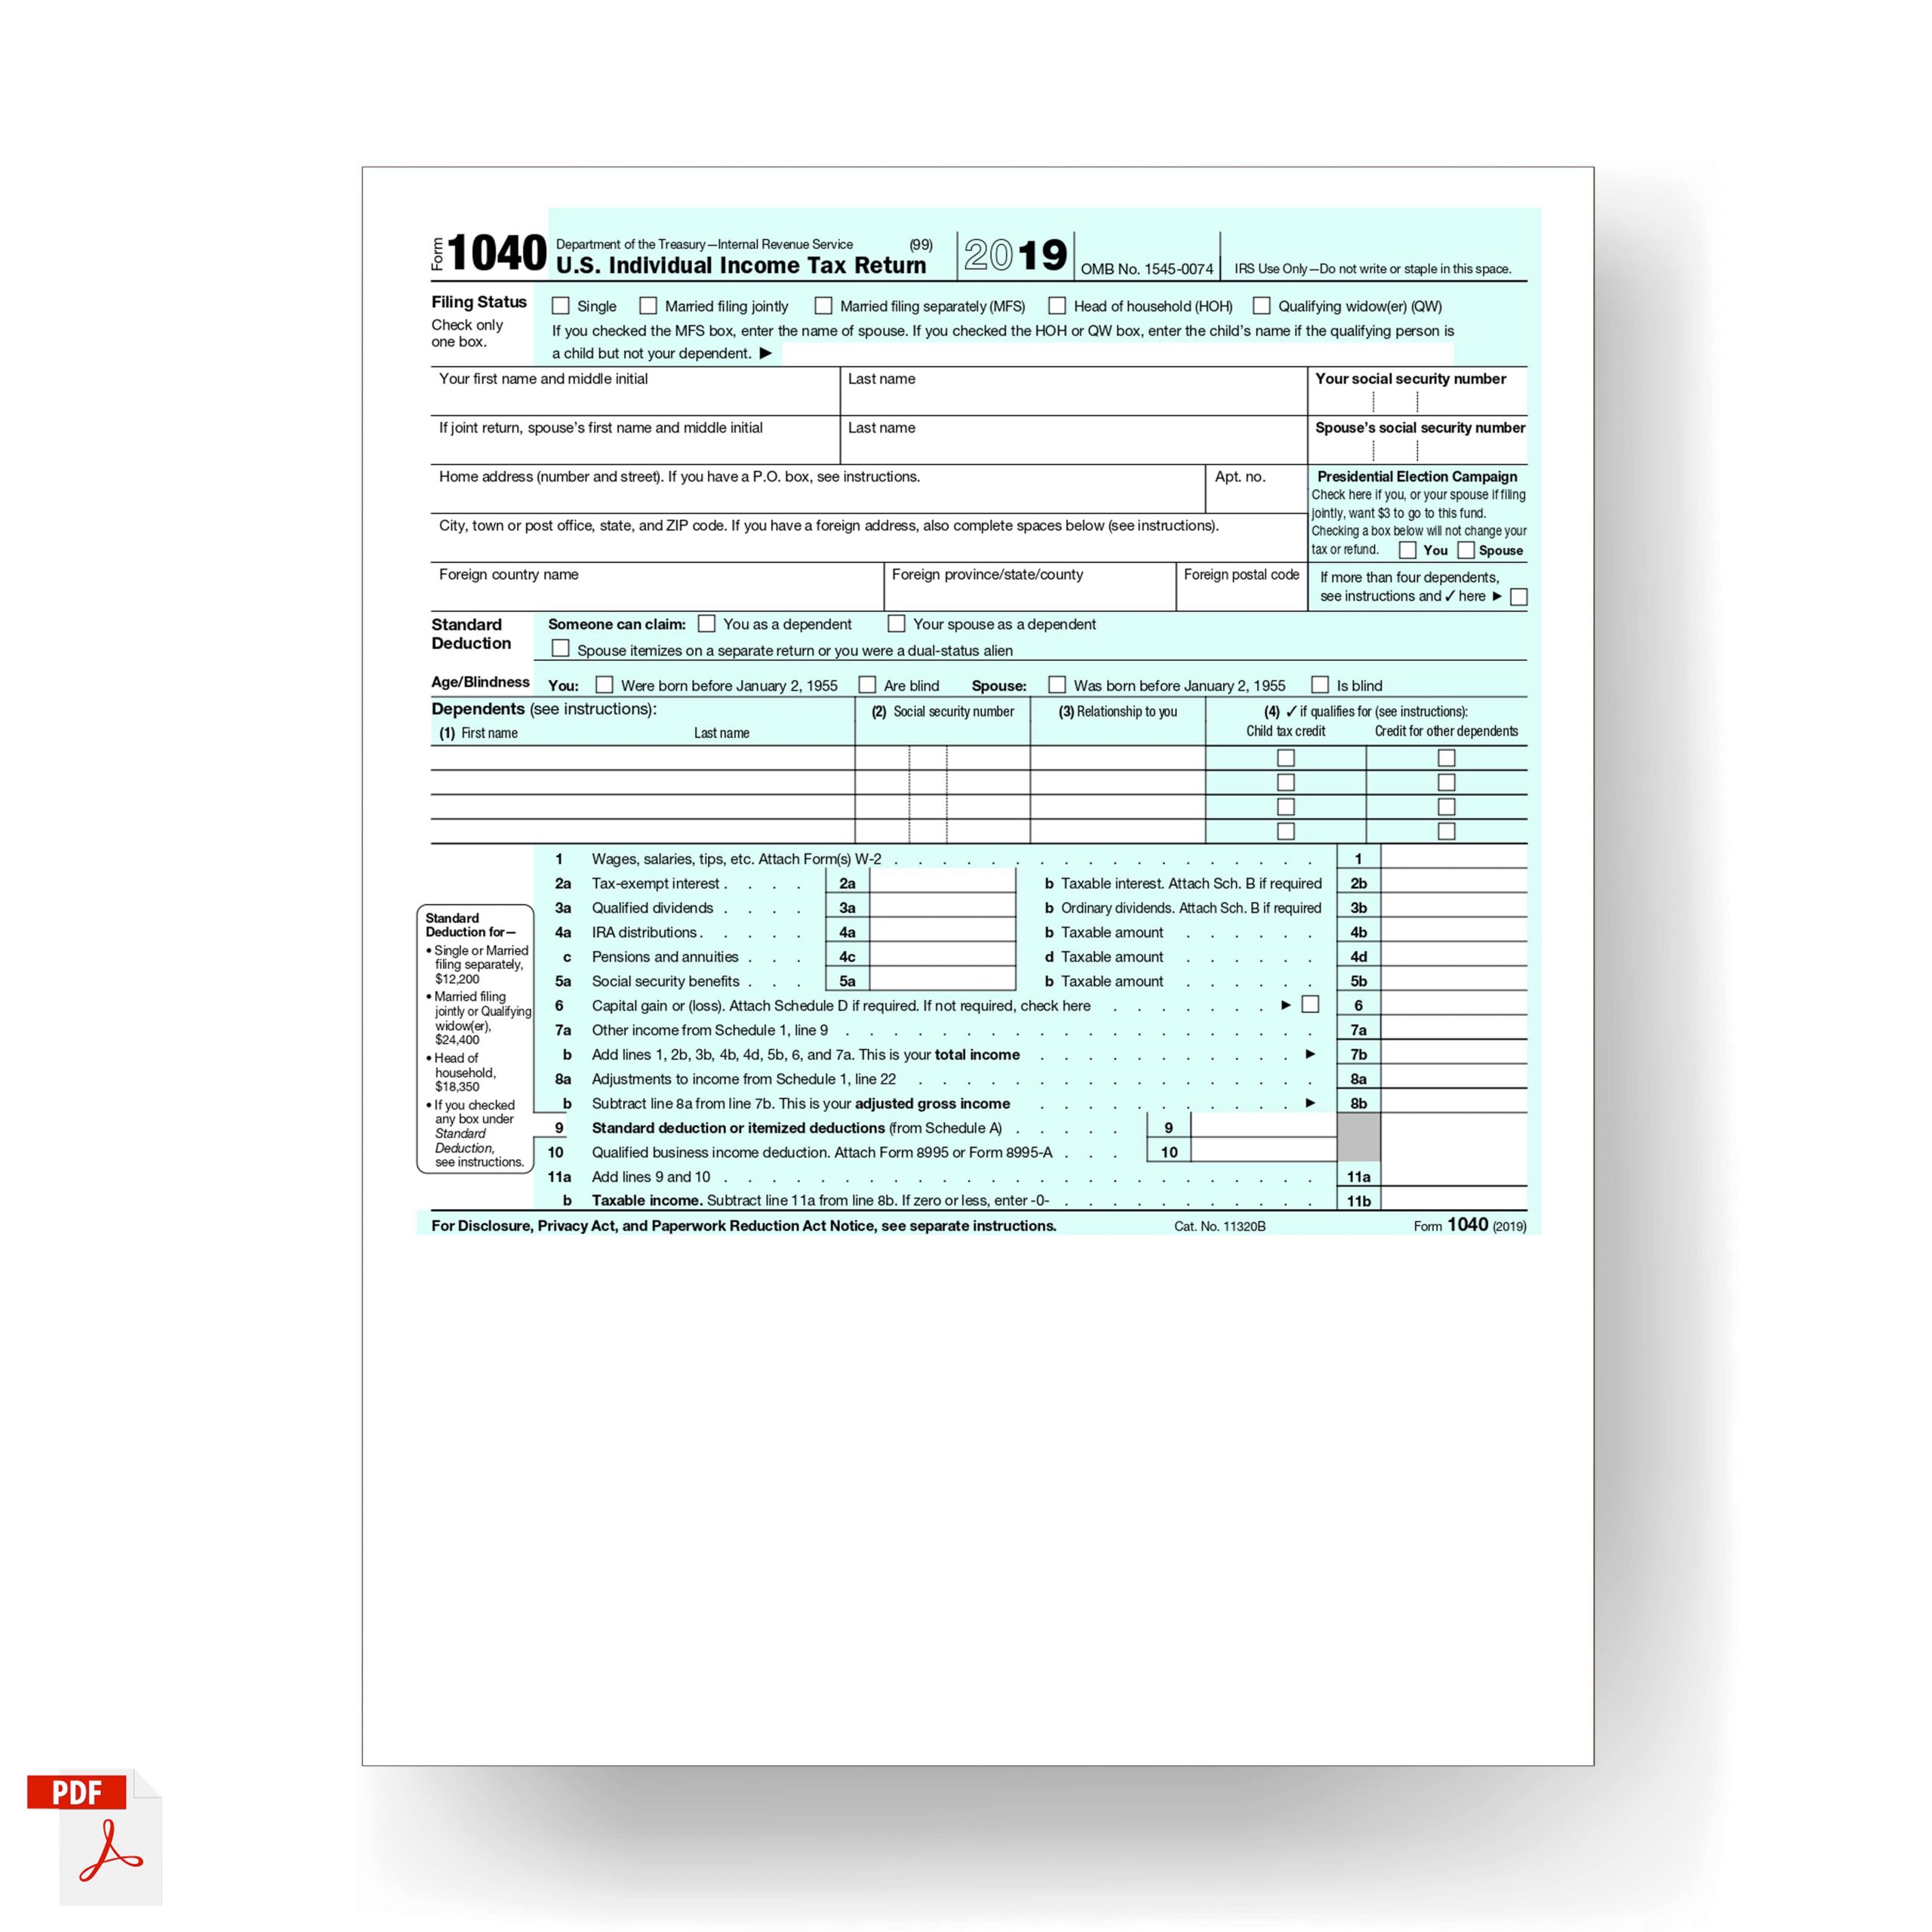 Form 1040, U.S. Individual Income Tax Return 2019 - 1